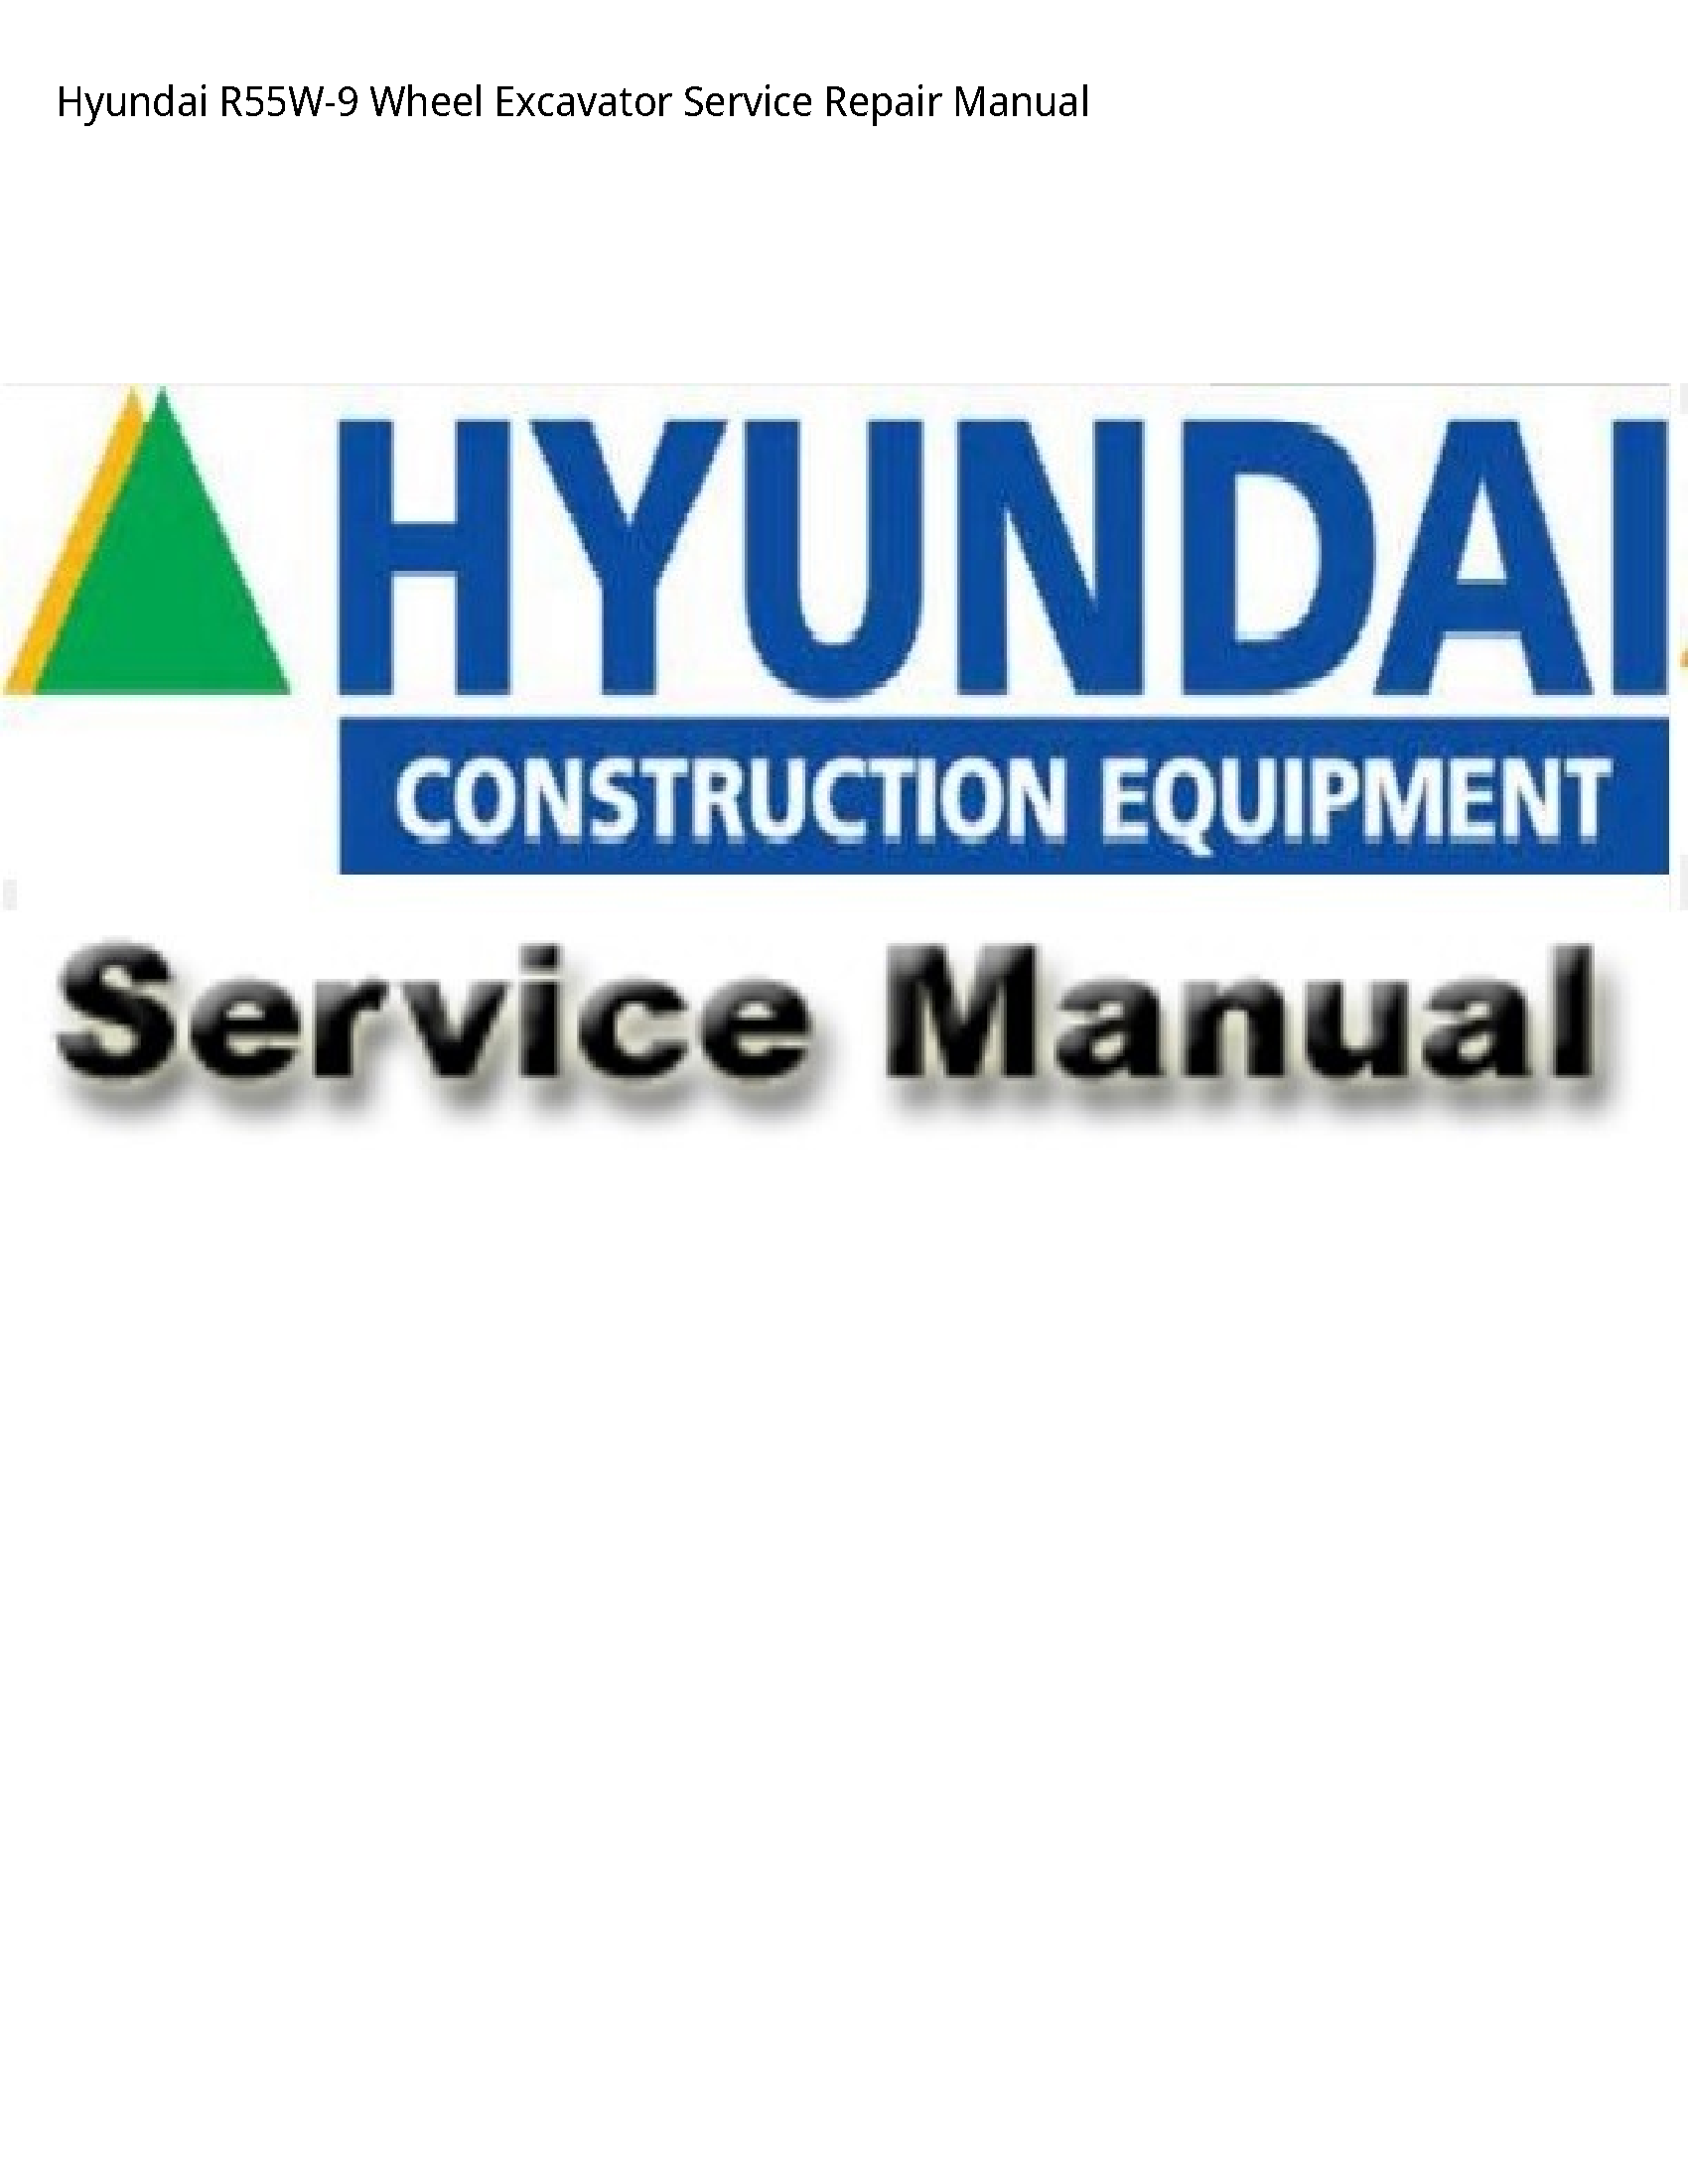 Hyundai R55W-9 Wheel Excavator manual